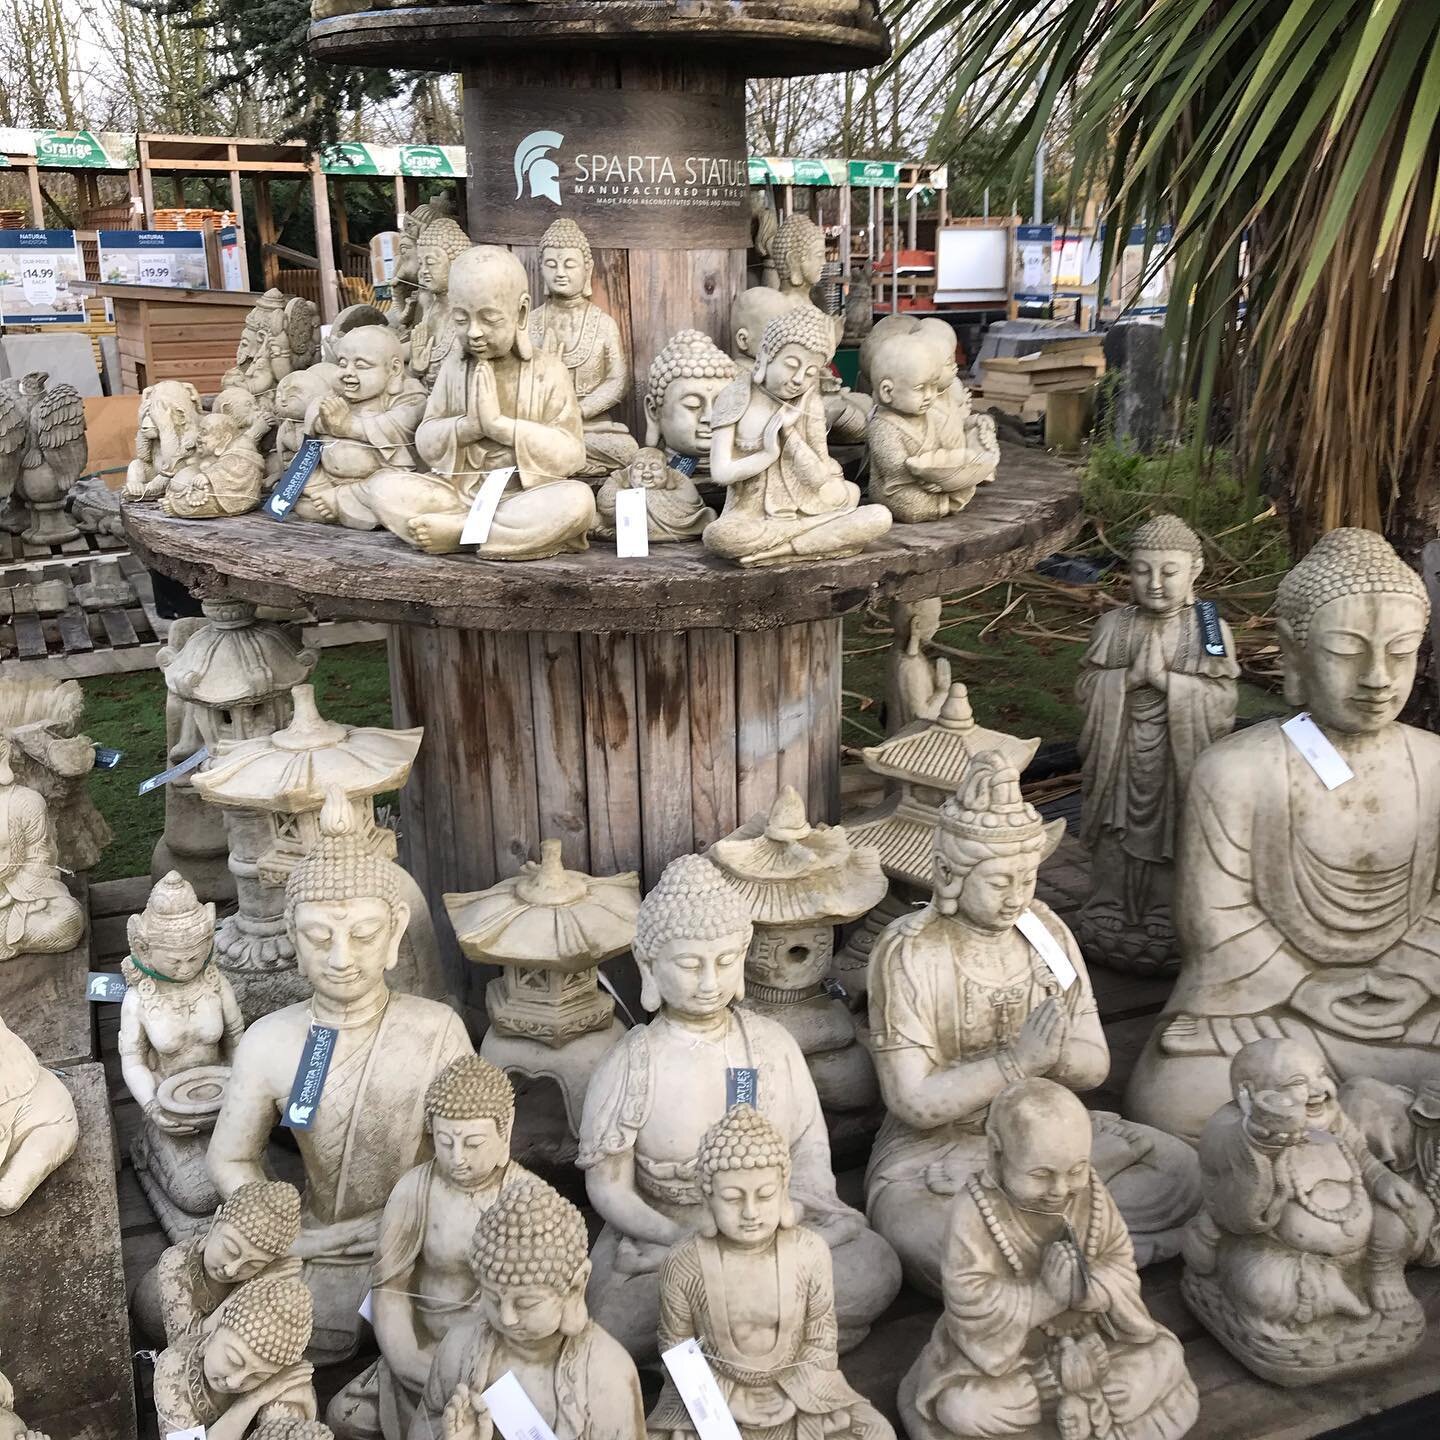 Fantastic range of stone ornaments in stock... some perfect presents 💚💚💚

#statues #christmas #presents #buddha #birdbath #birdbaths #garden #gardening #gardnersworld #gardenamoment #gardencentres